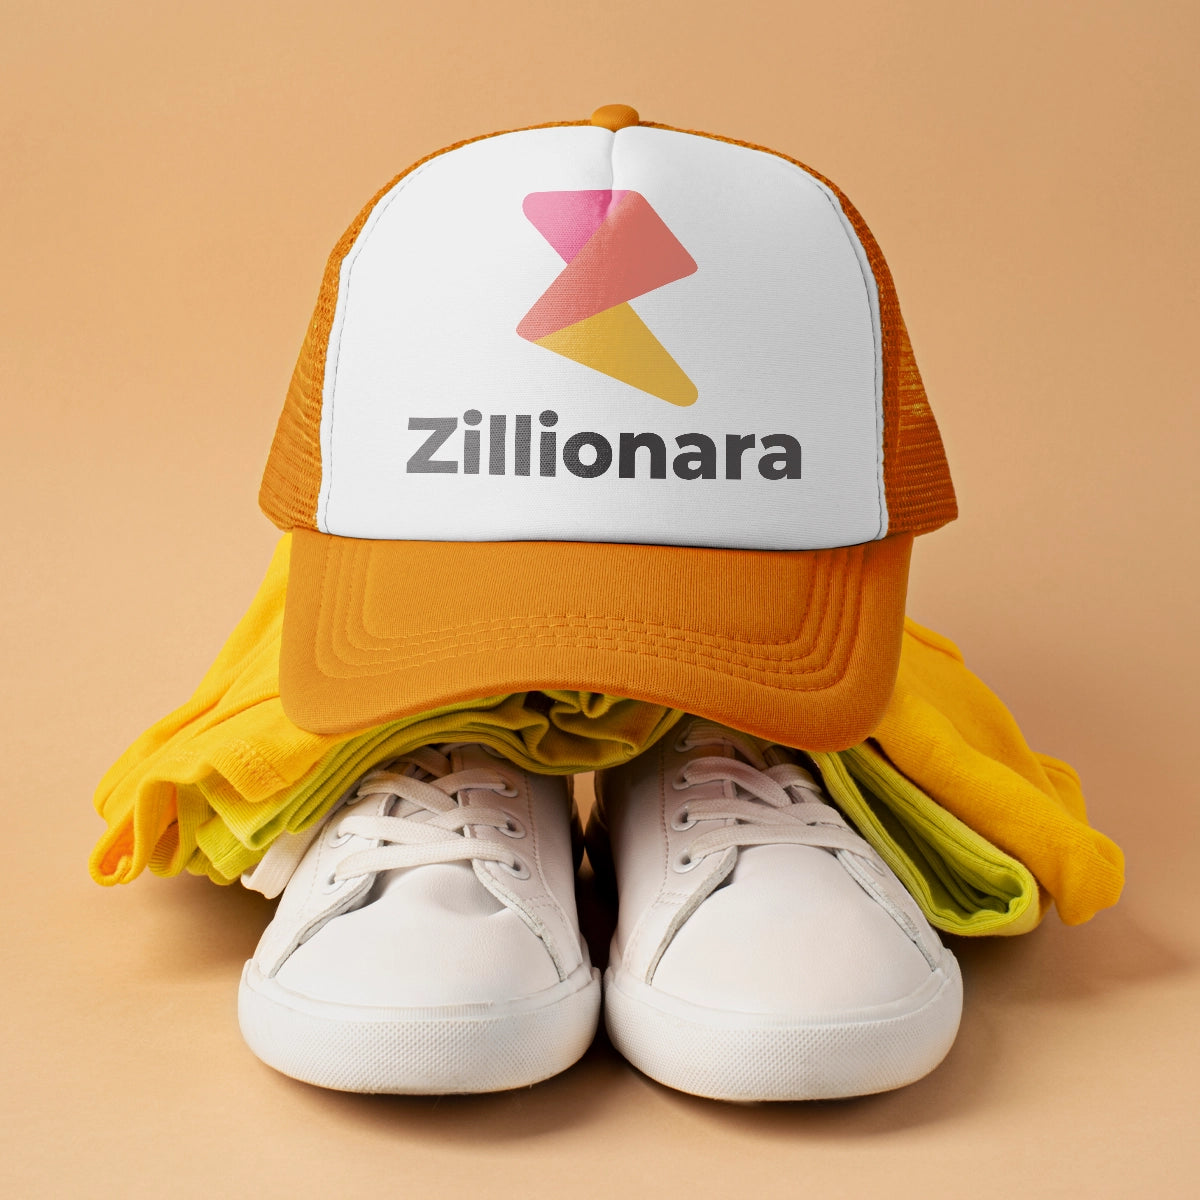 zillionara.com